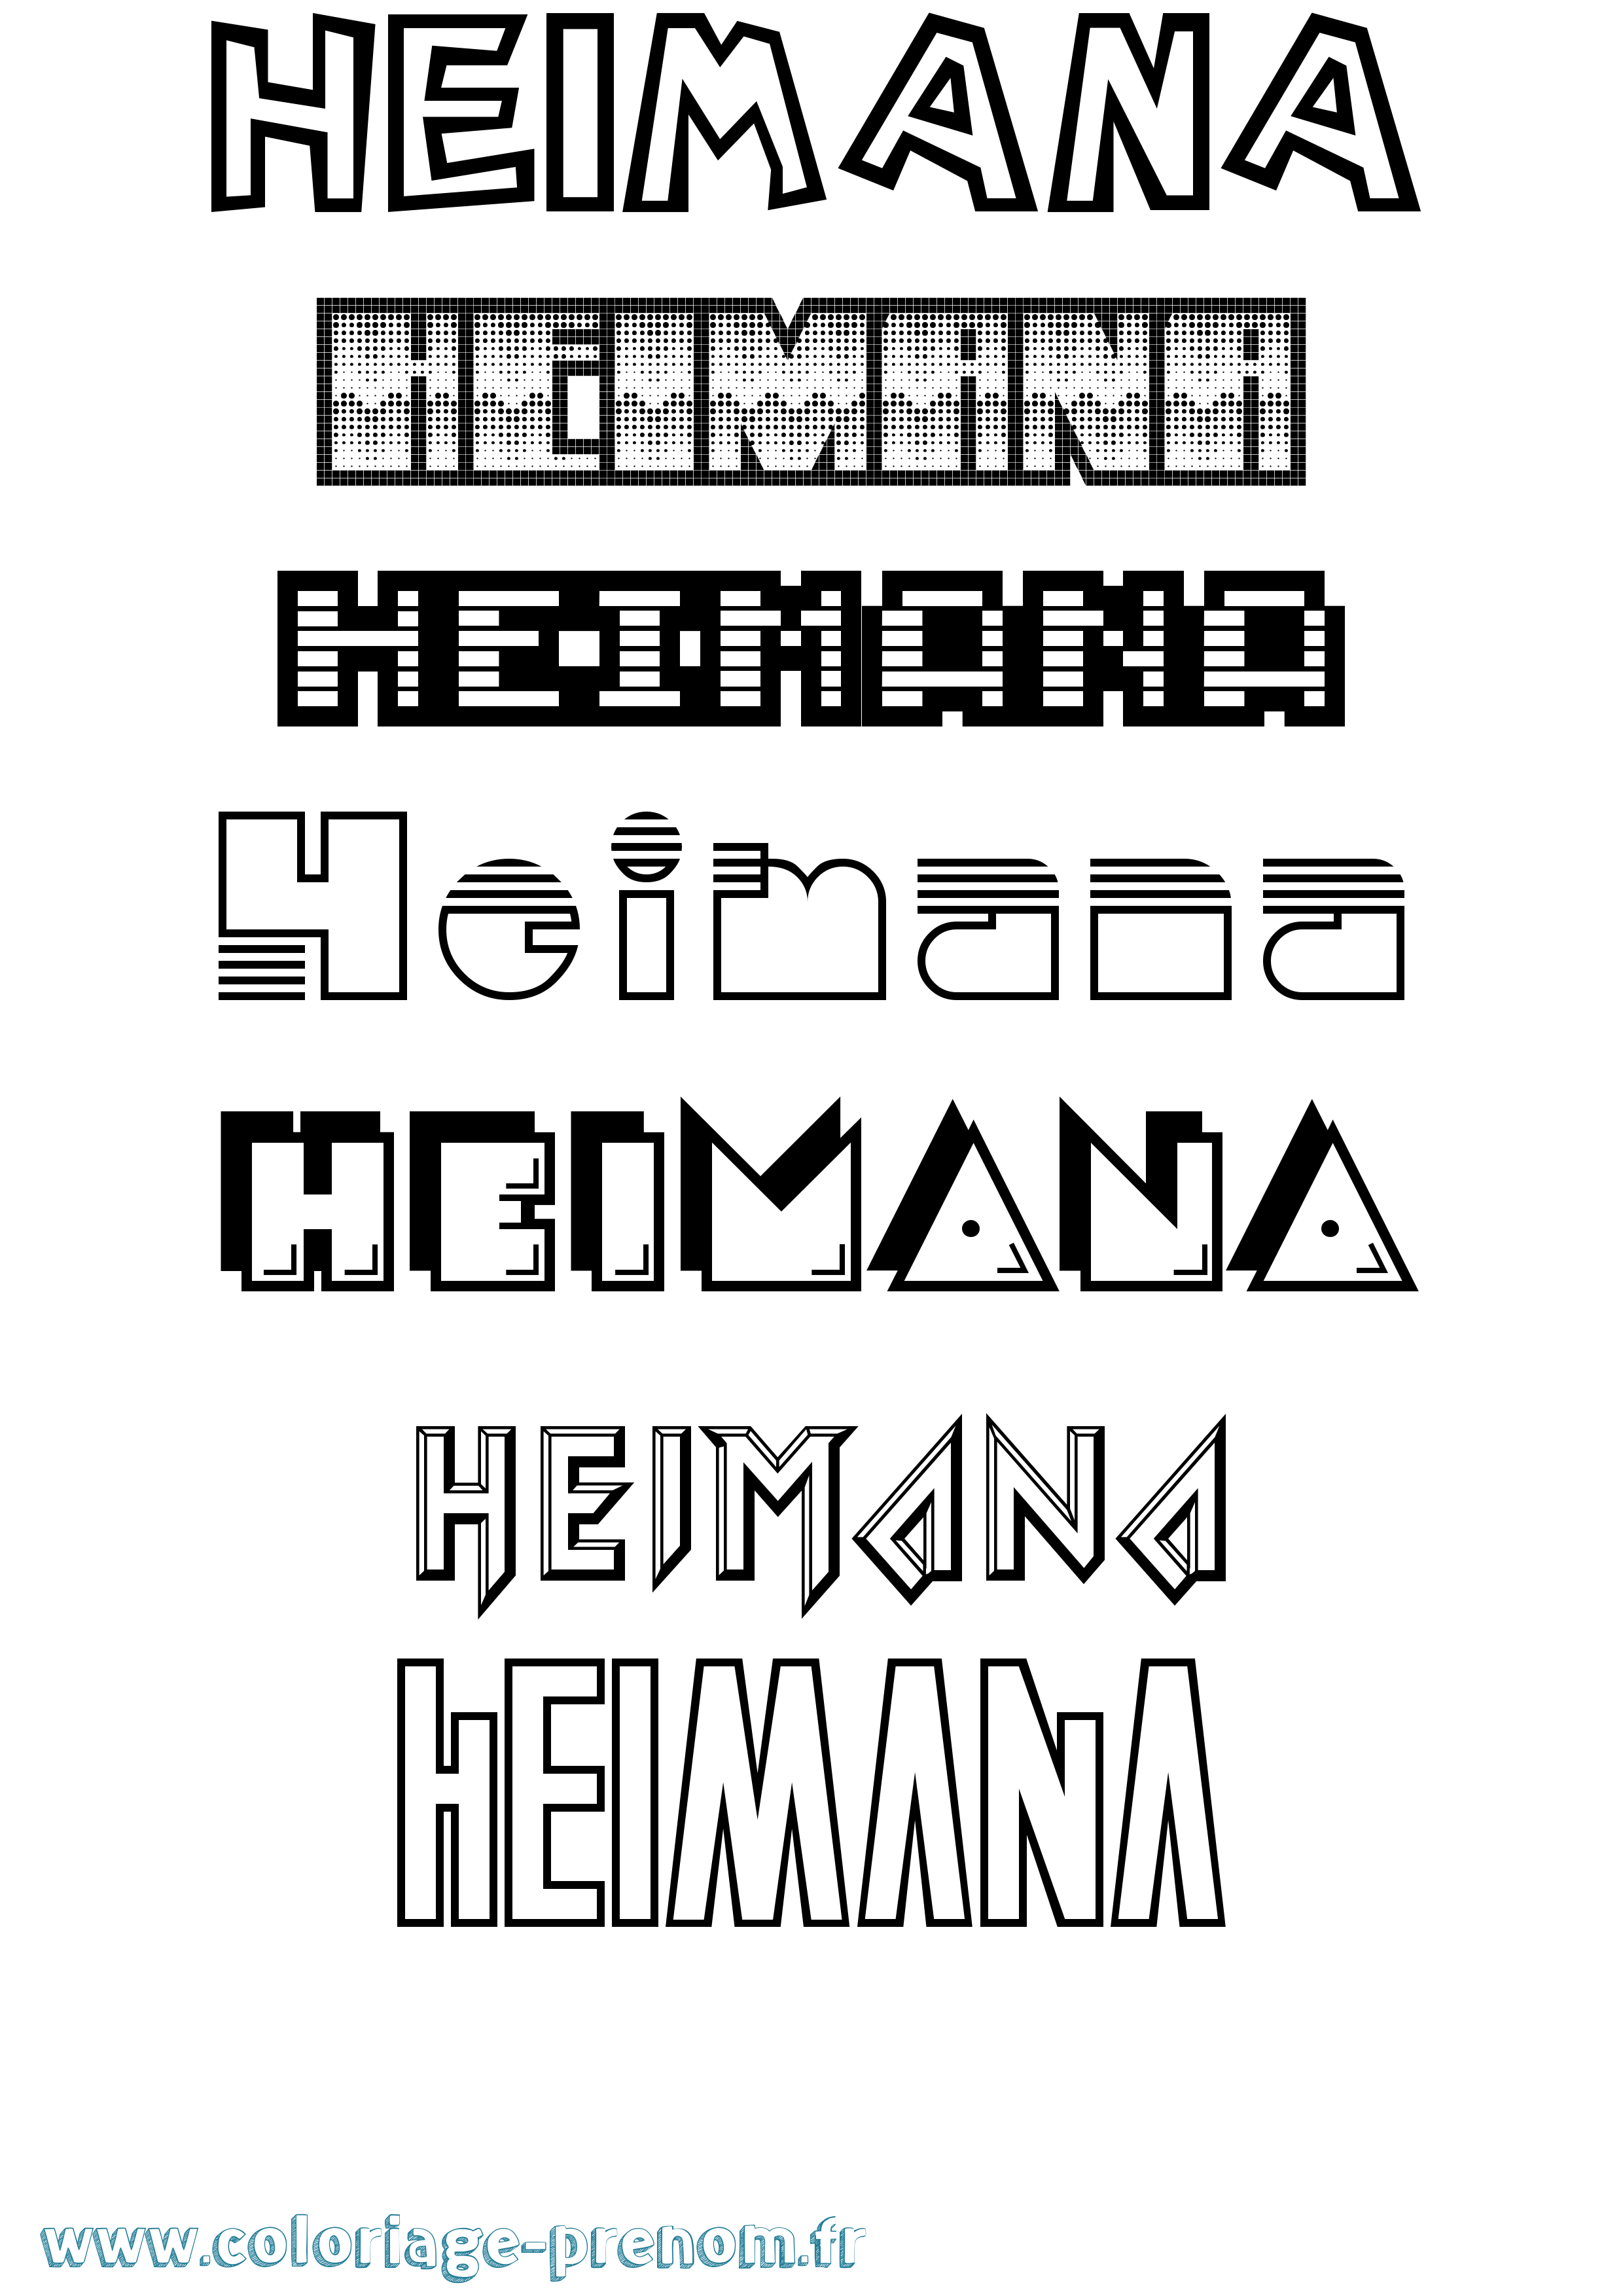 Coloriage prénom Heimana Jeux Vidéos